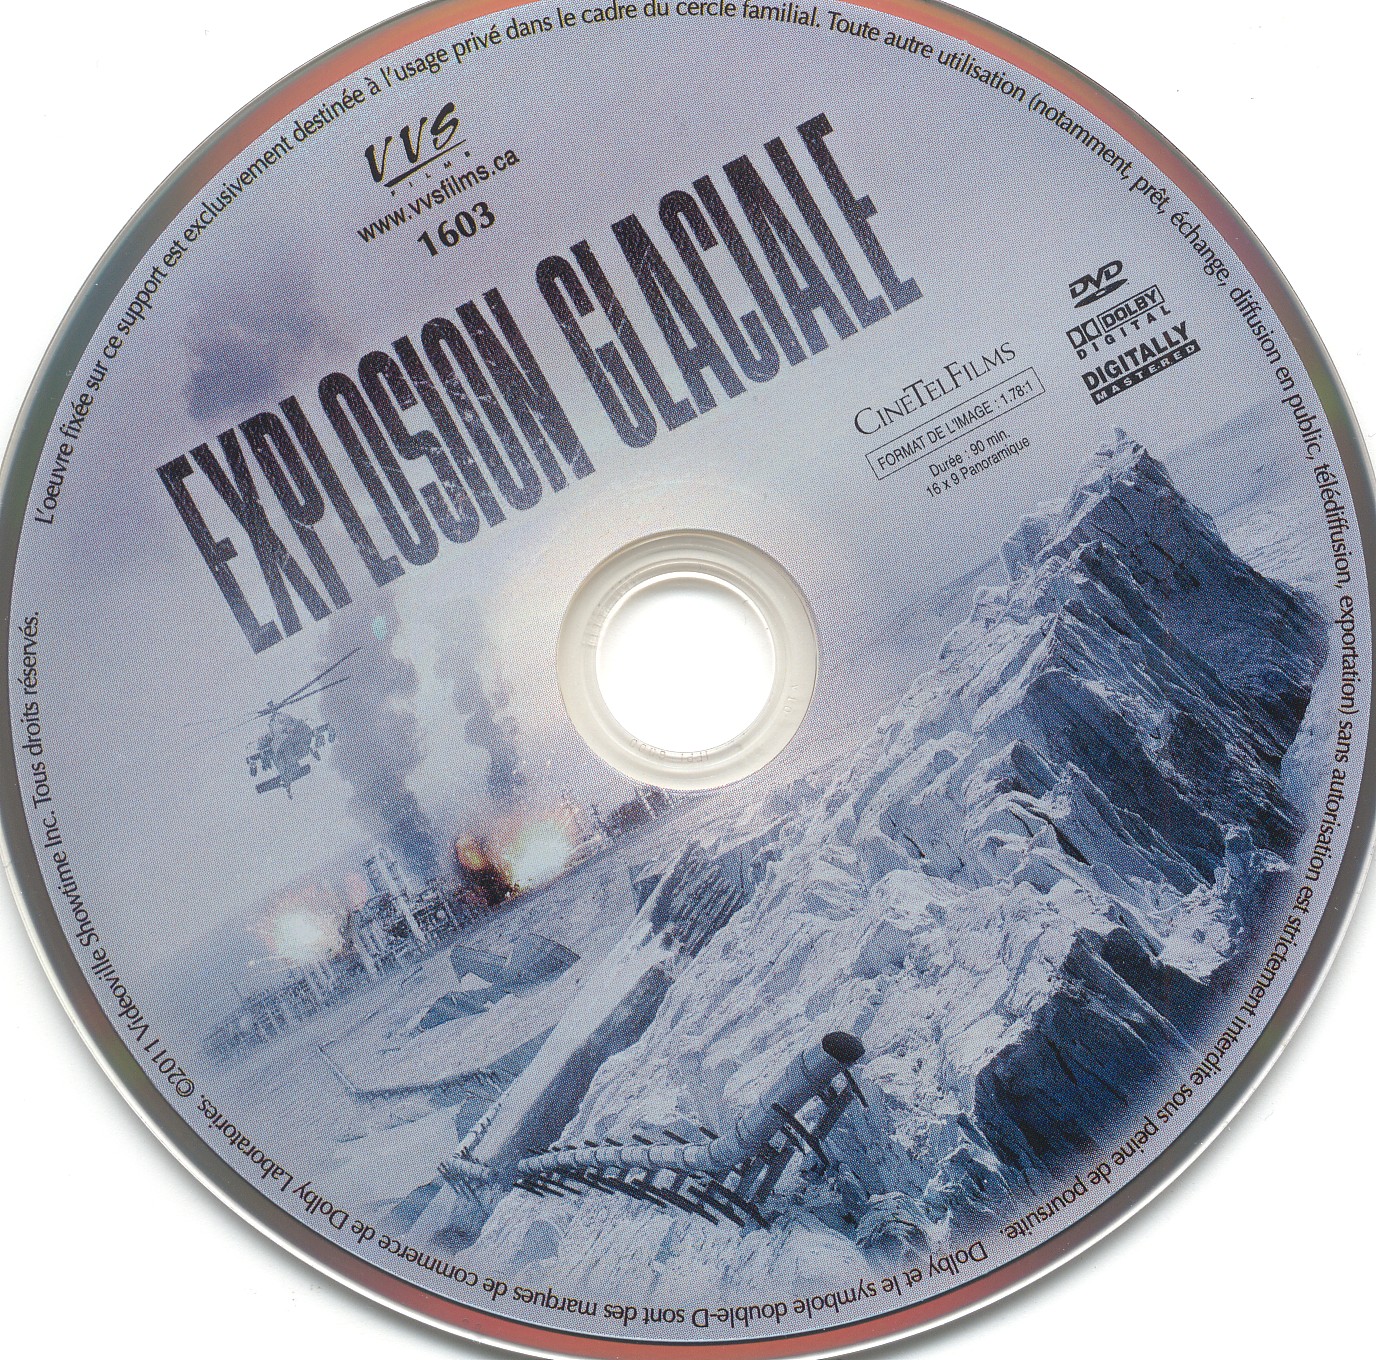 Explosion glaciale (Canadienne)